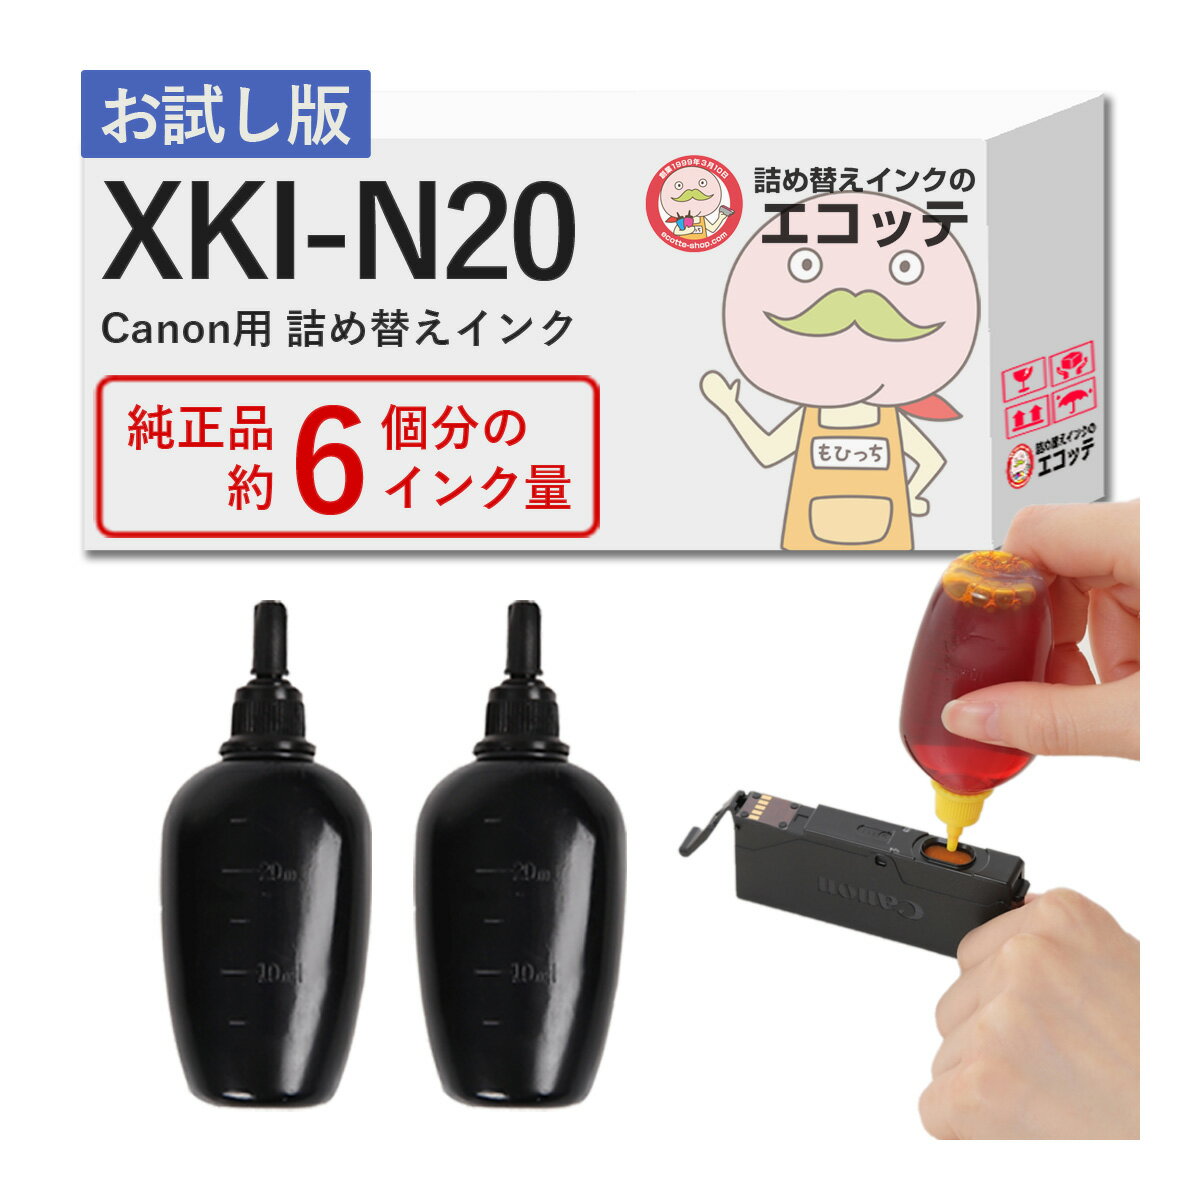 XKI-N20PGBK Canon キャノン 用 純正用詰め替えインク ビギナーセット 顔料ブラック 30ml×2本 ┃ インクタンク xki-n21 xki-n21 n20/5mp XKIN20 XKIN21 PIXUS ピクサス XK500 XK110 XK100